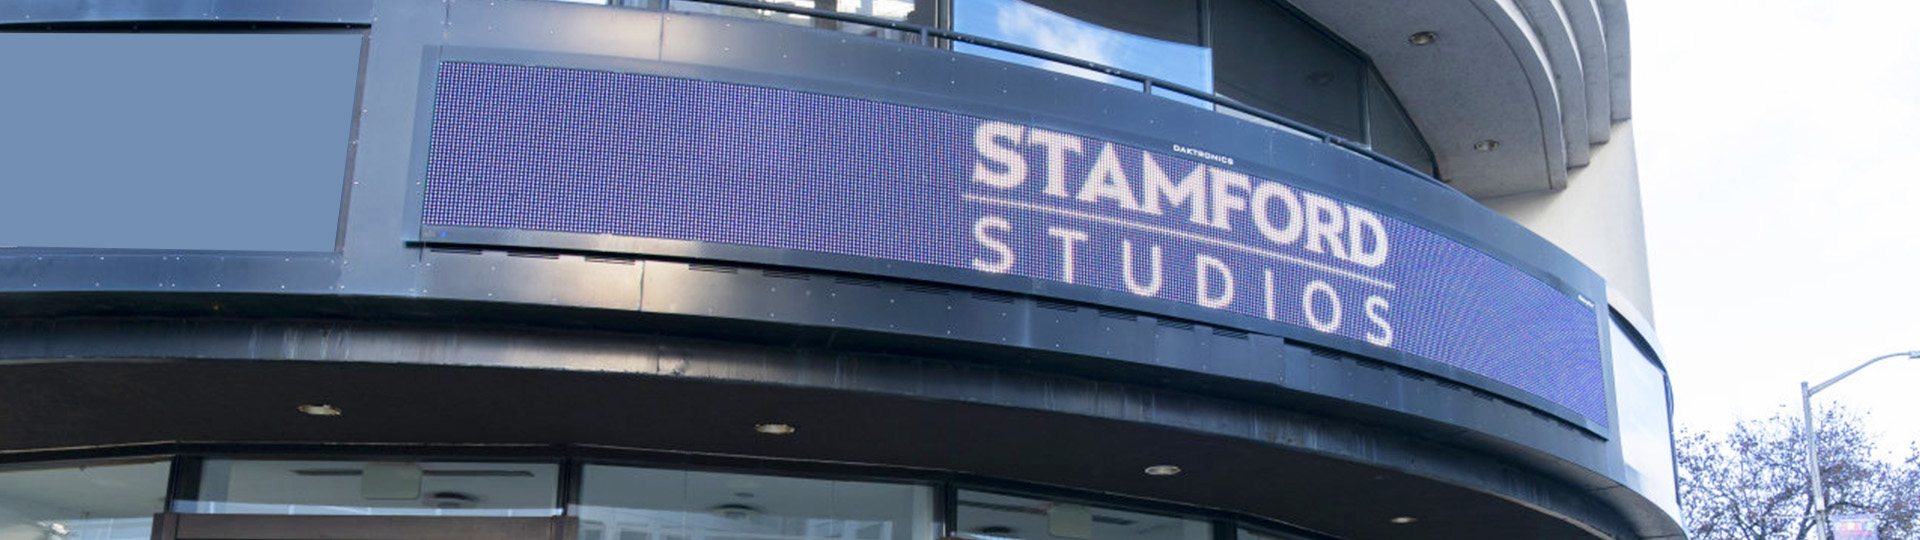 Stamford Studios Exterior